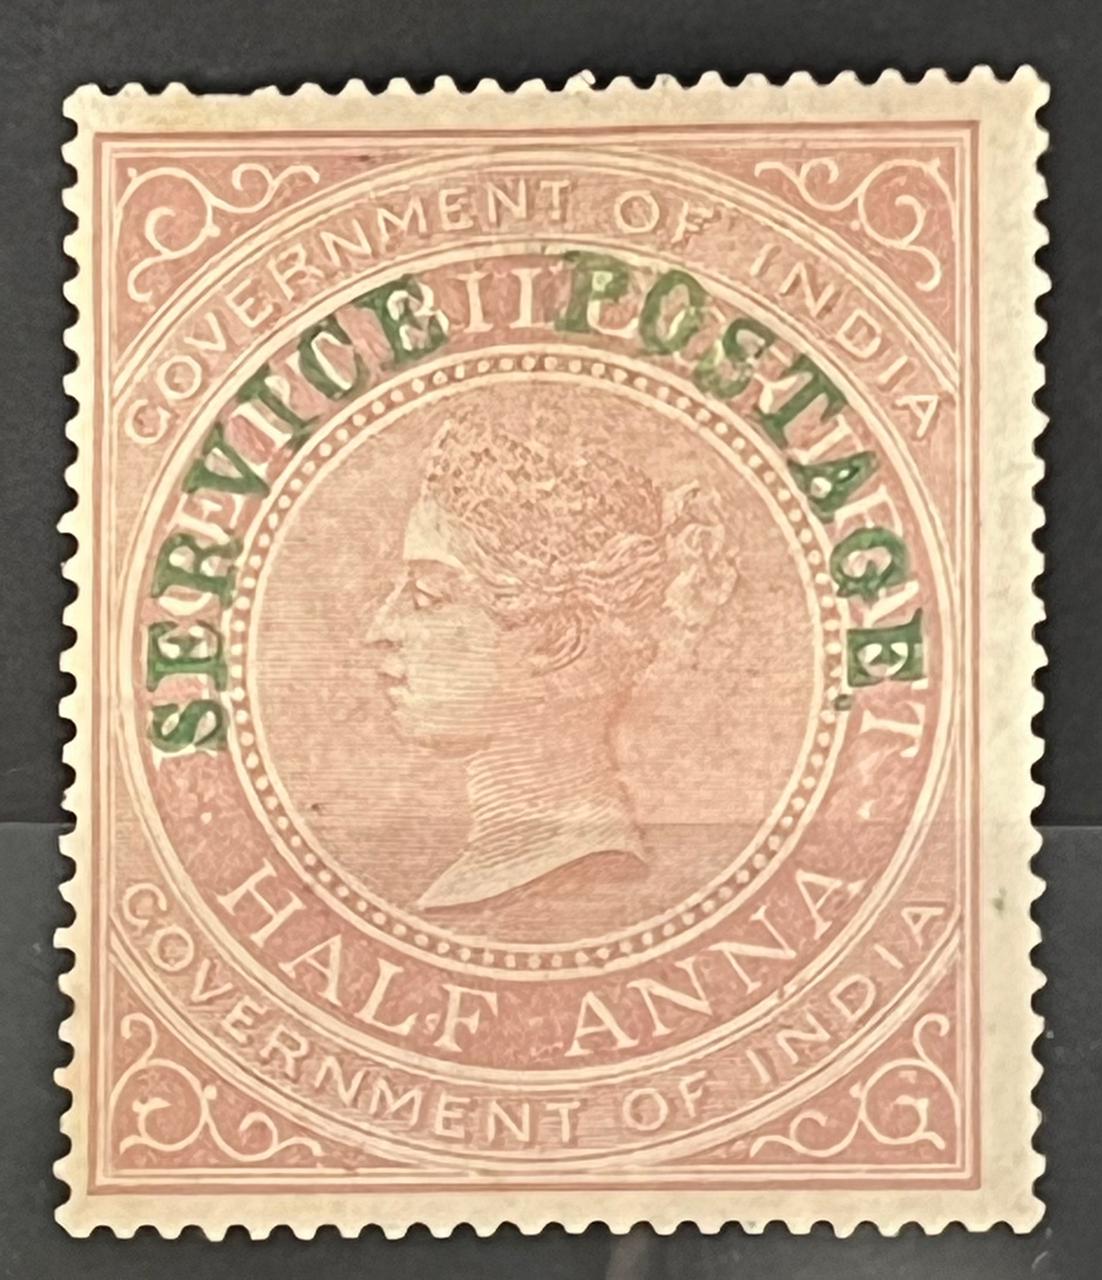 India 1866 QV SG O19 "SERVICE POSTAGE" Overprint 1/2a OFFICIAL REPRINT Rare